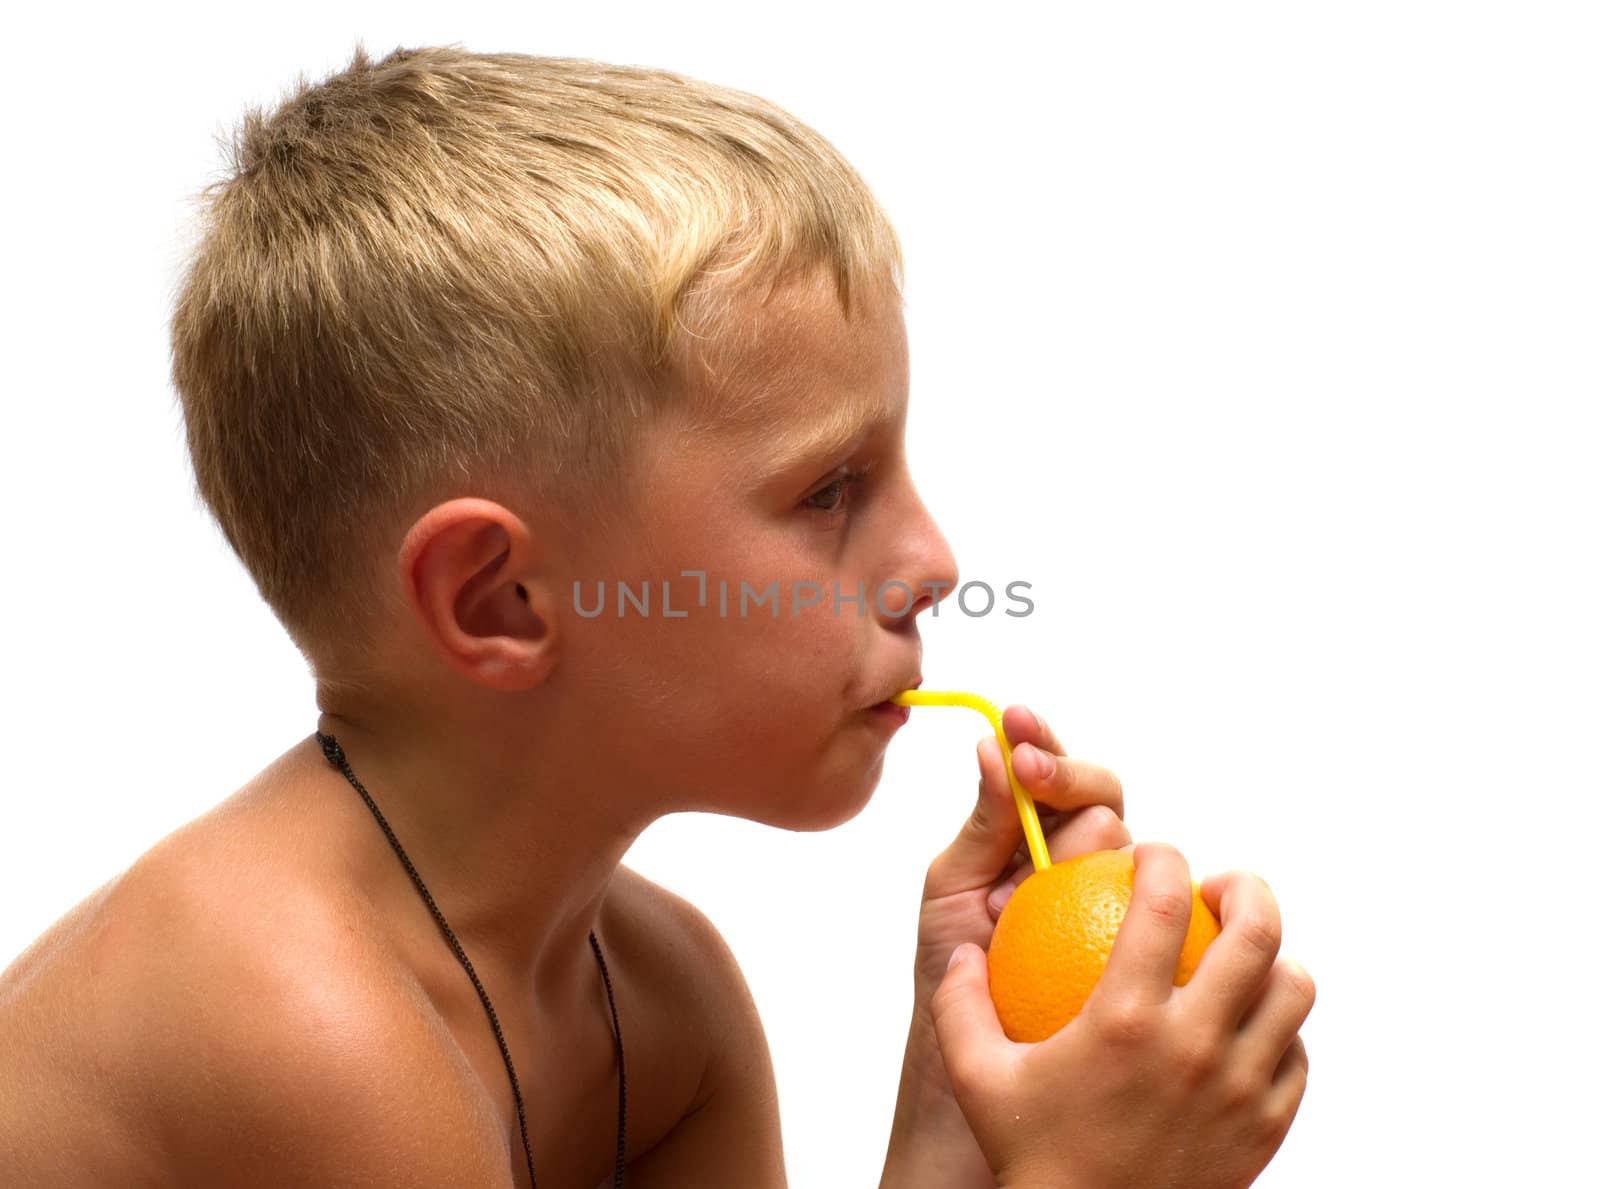 Boy drinking orange juice through straws isolated on a white background.